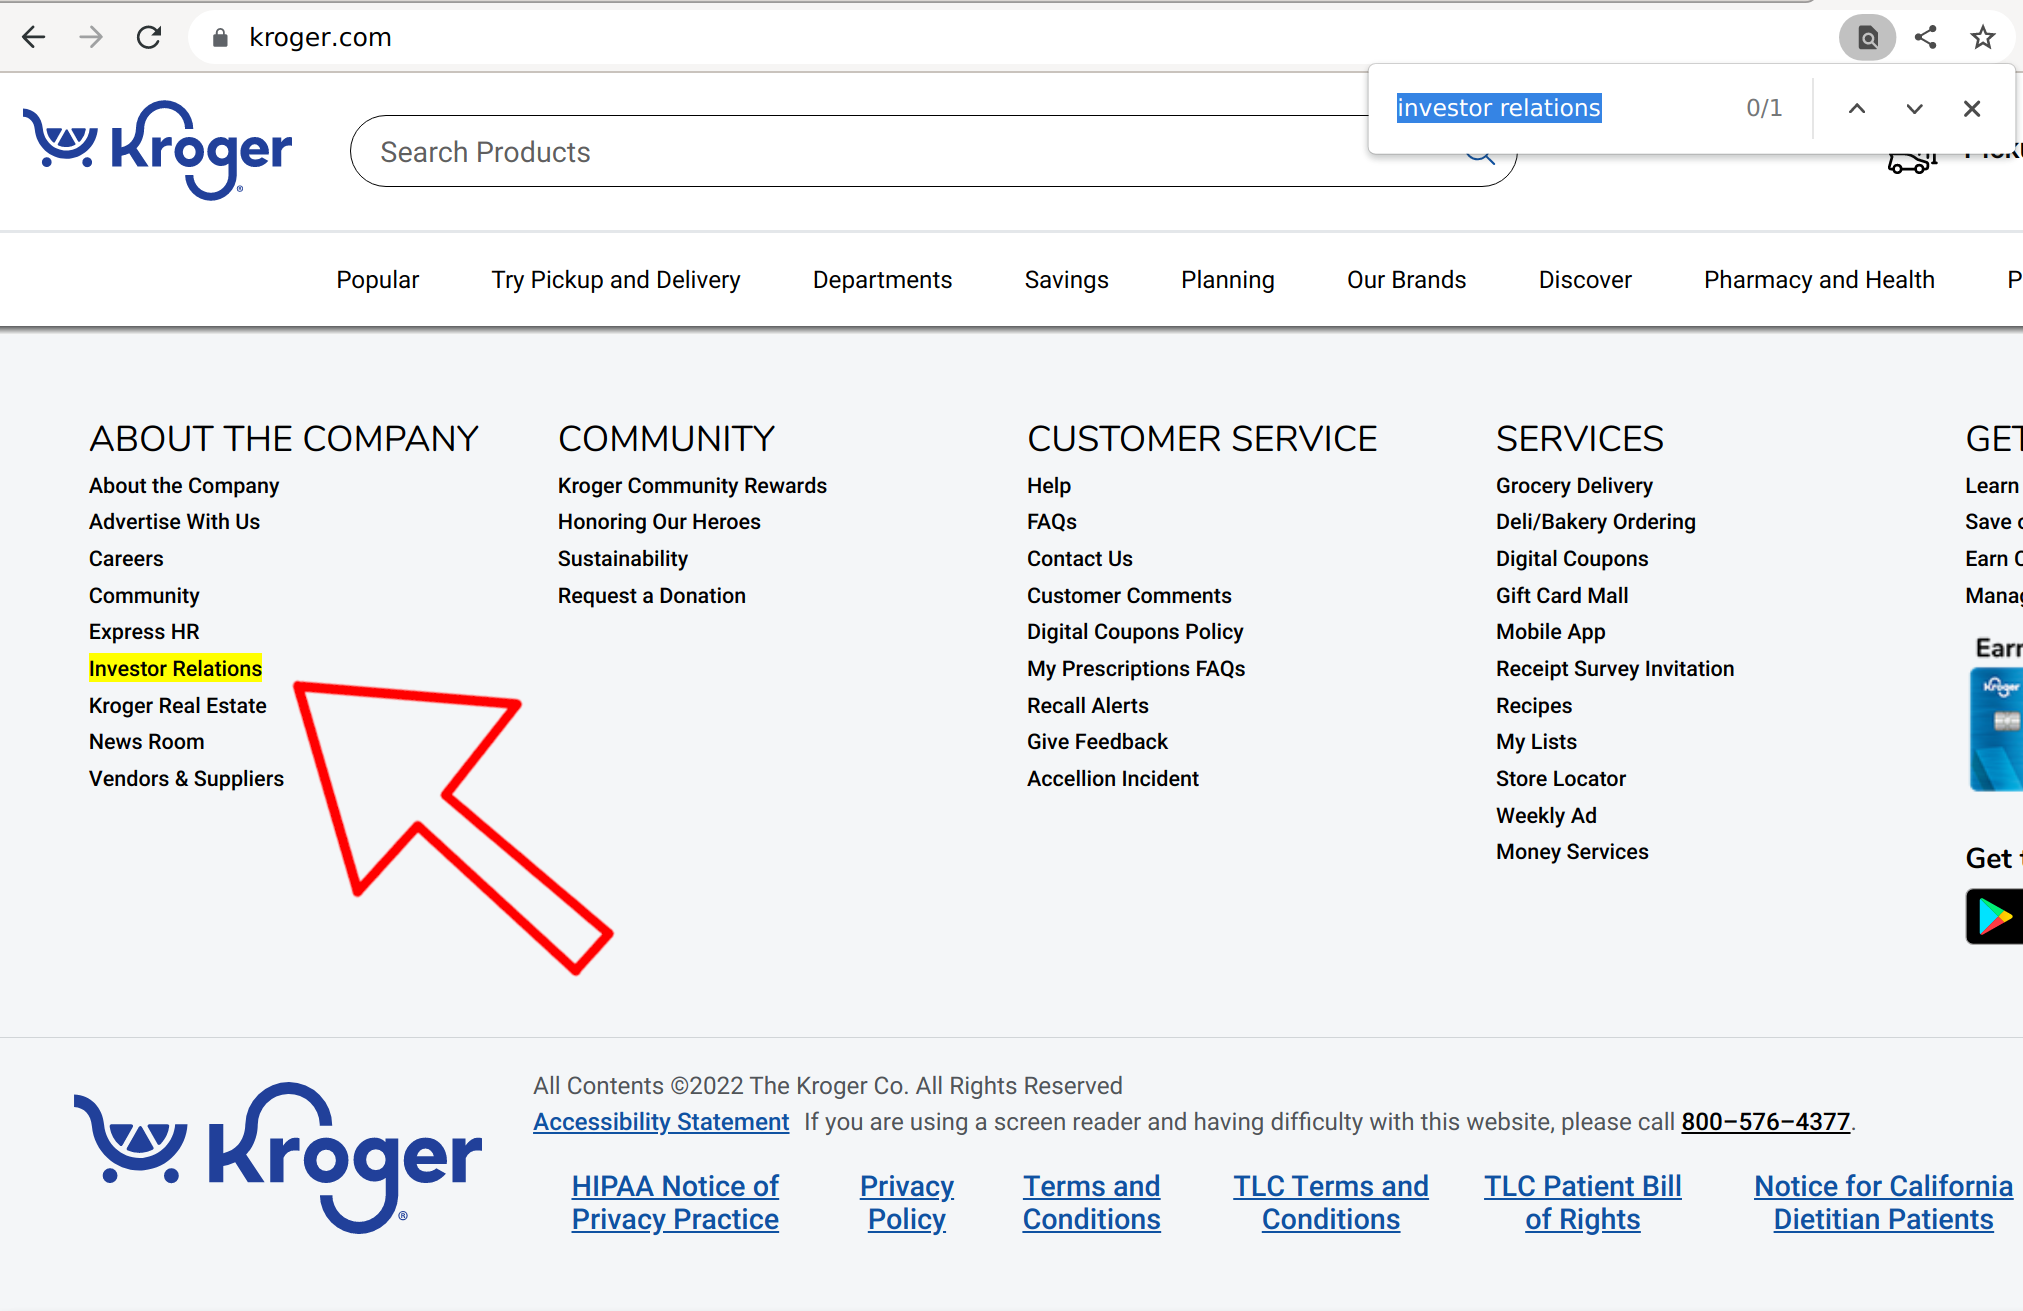 Finding the investor relations website of supermarket company Kroger